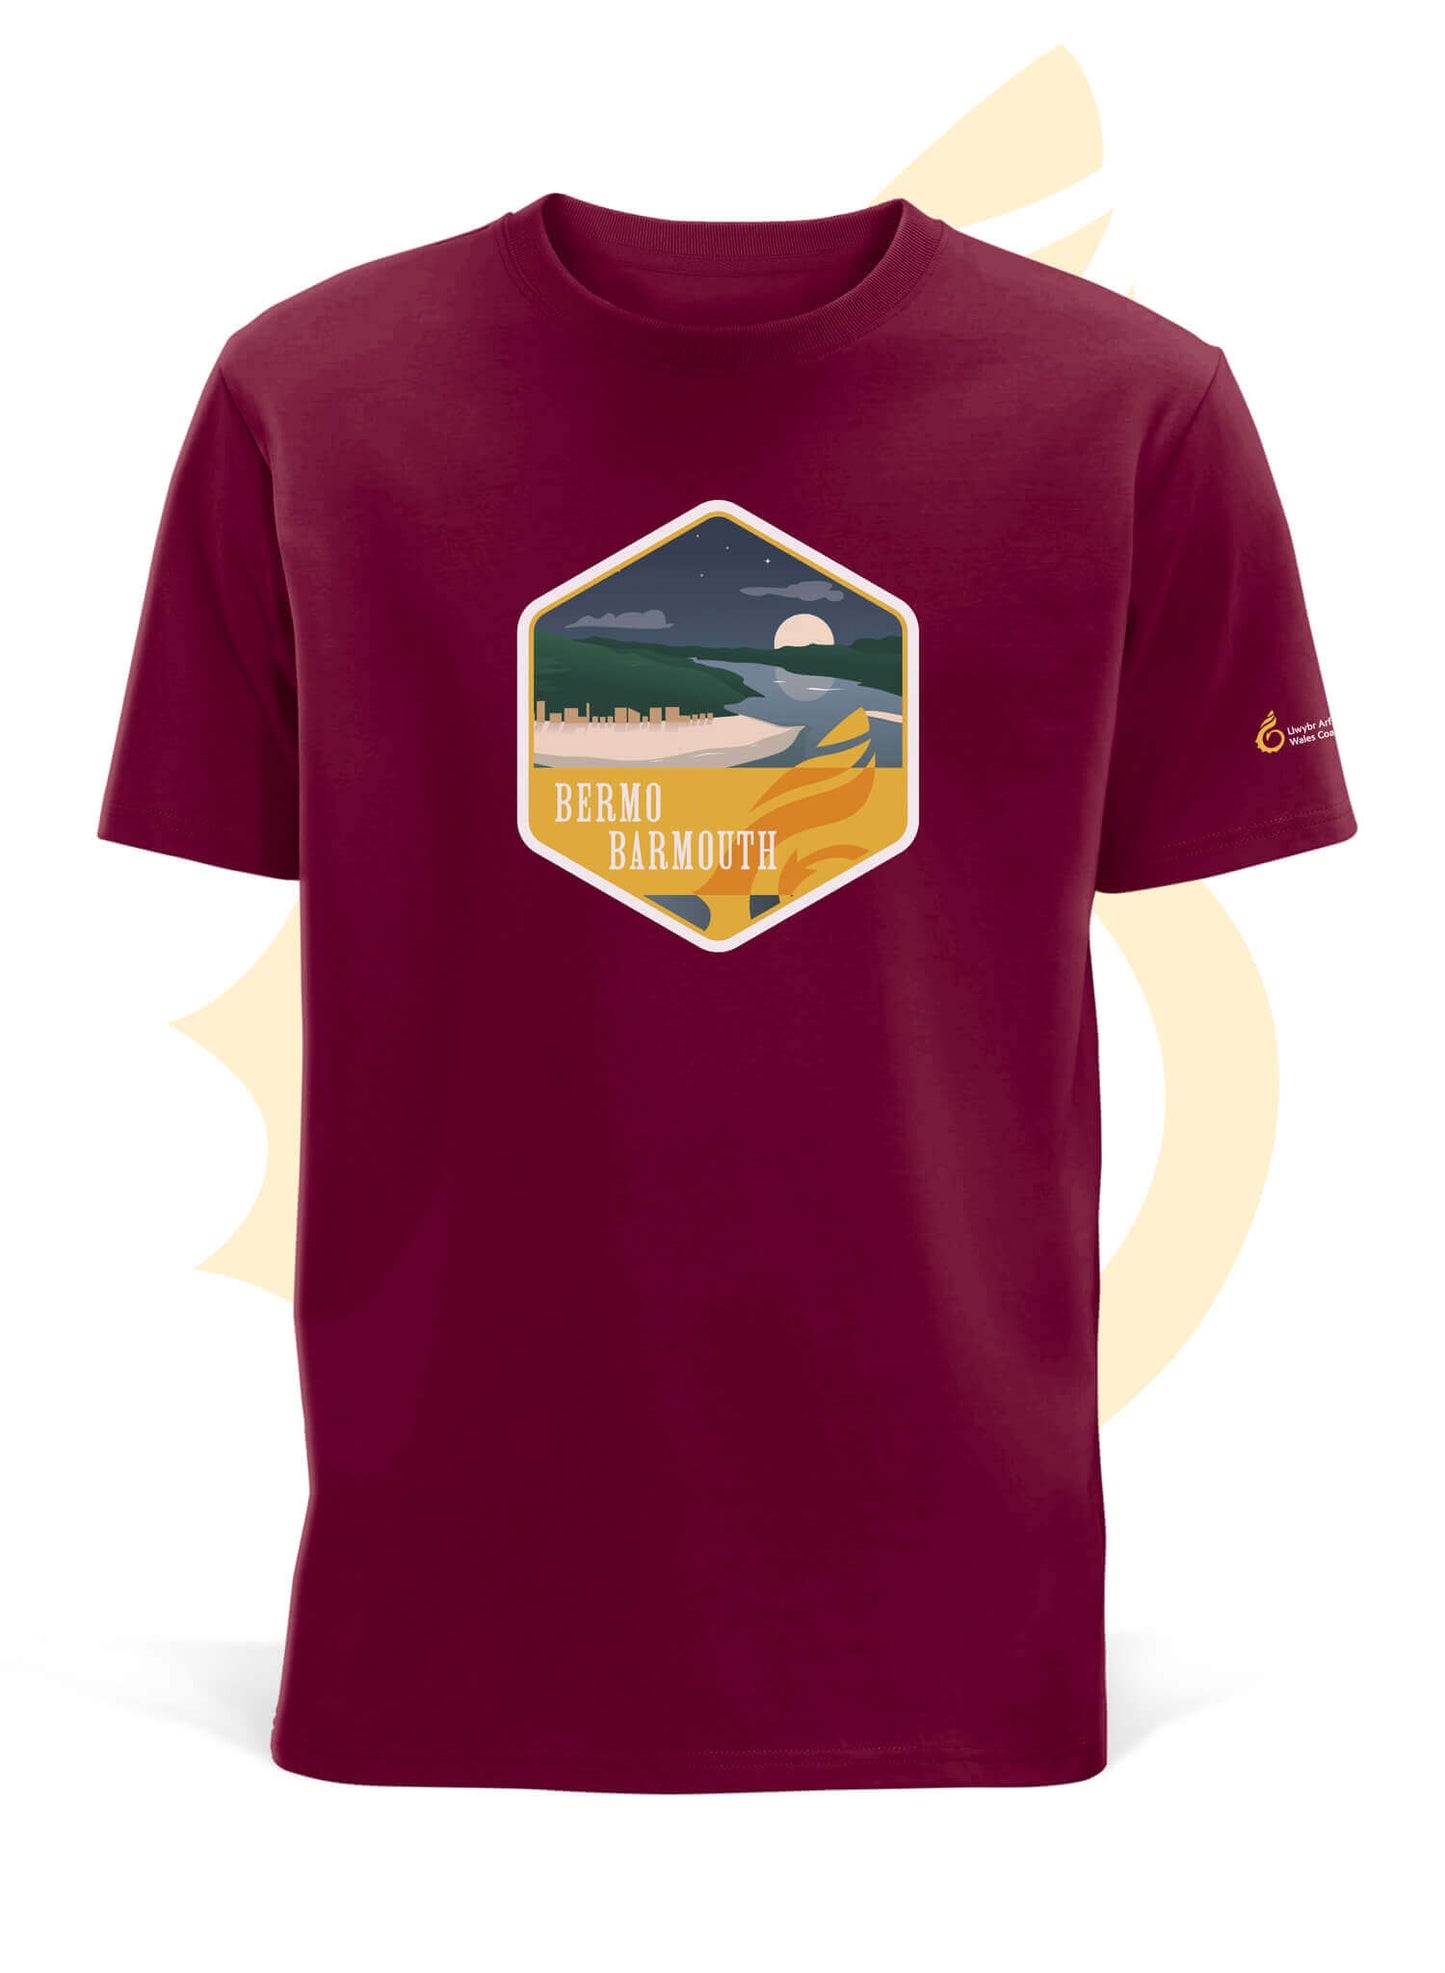 Wales Coast Path burgundy organic cotton t-shirt with Barmouth design